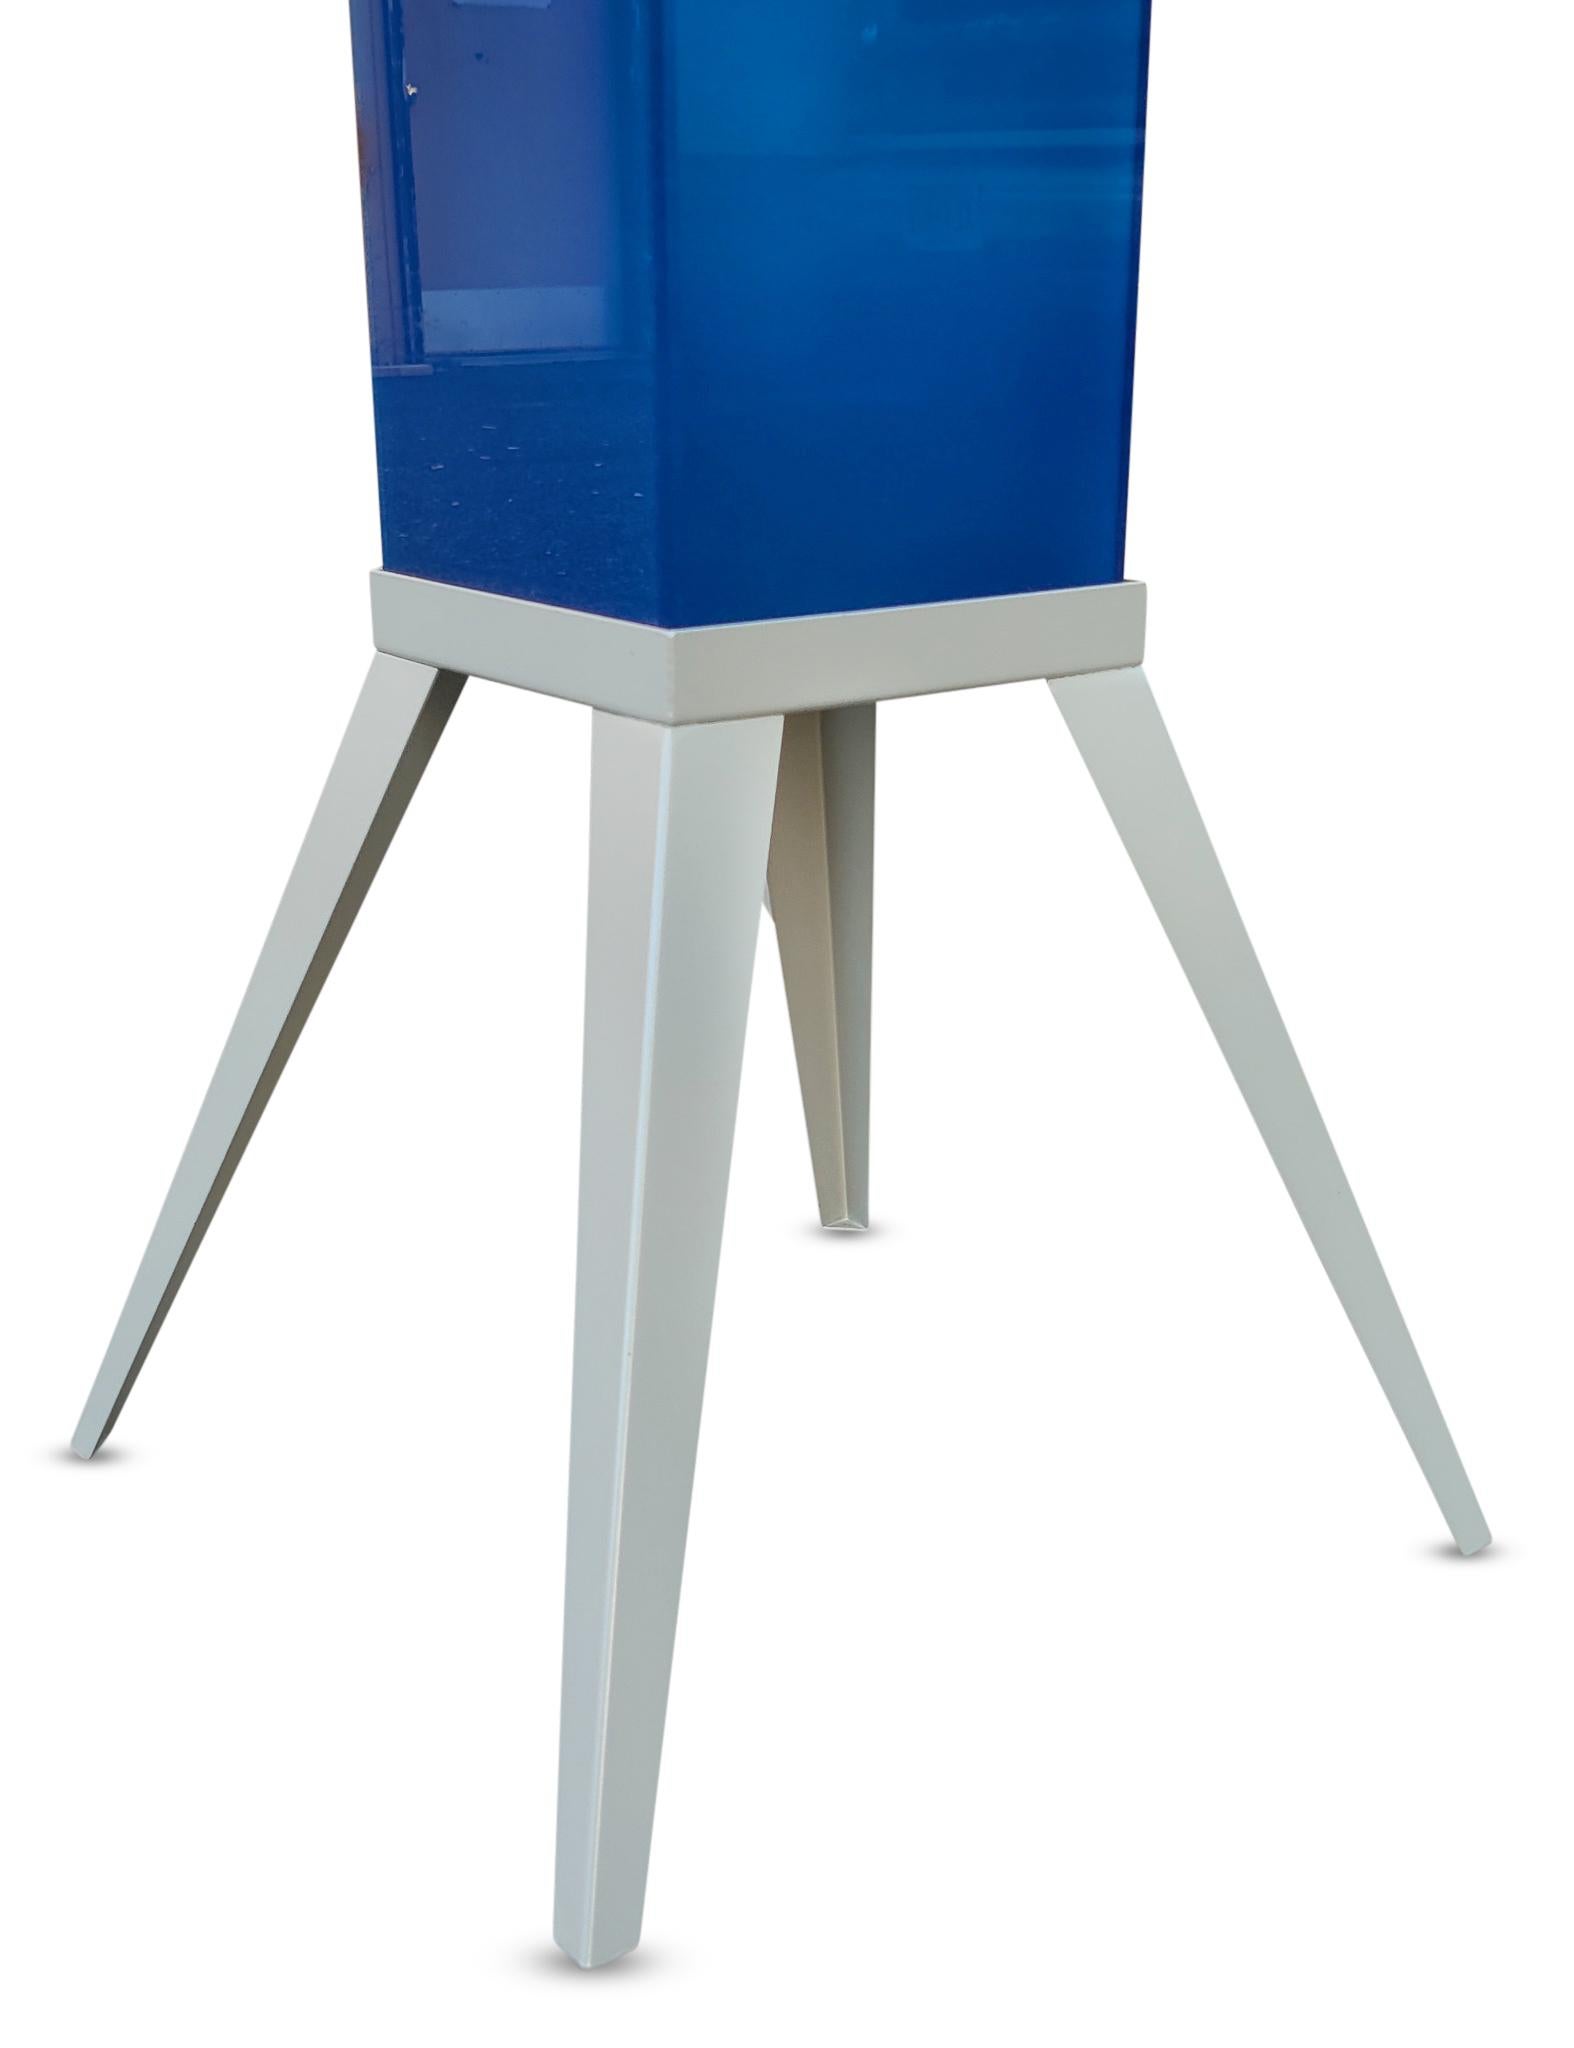 Steel Post-Modern Sculptural Mood Lighting Tower Blue Glass Floor Lamp by Curvet USA For Sale